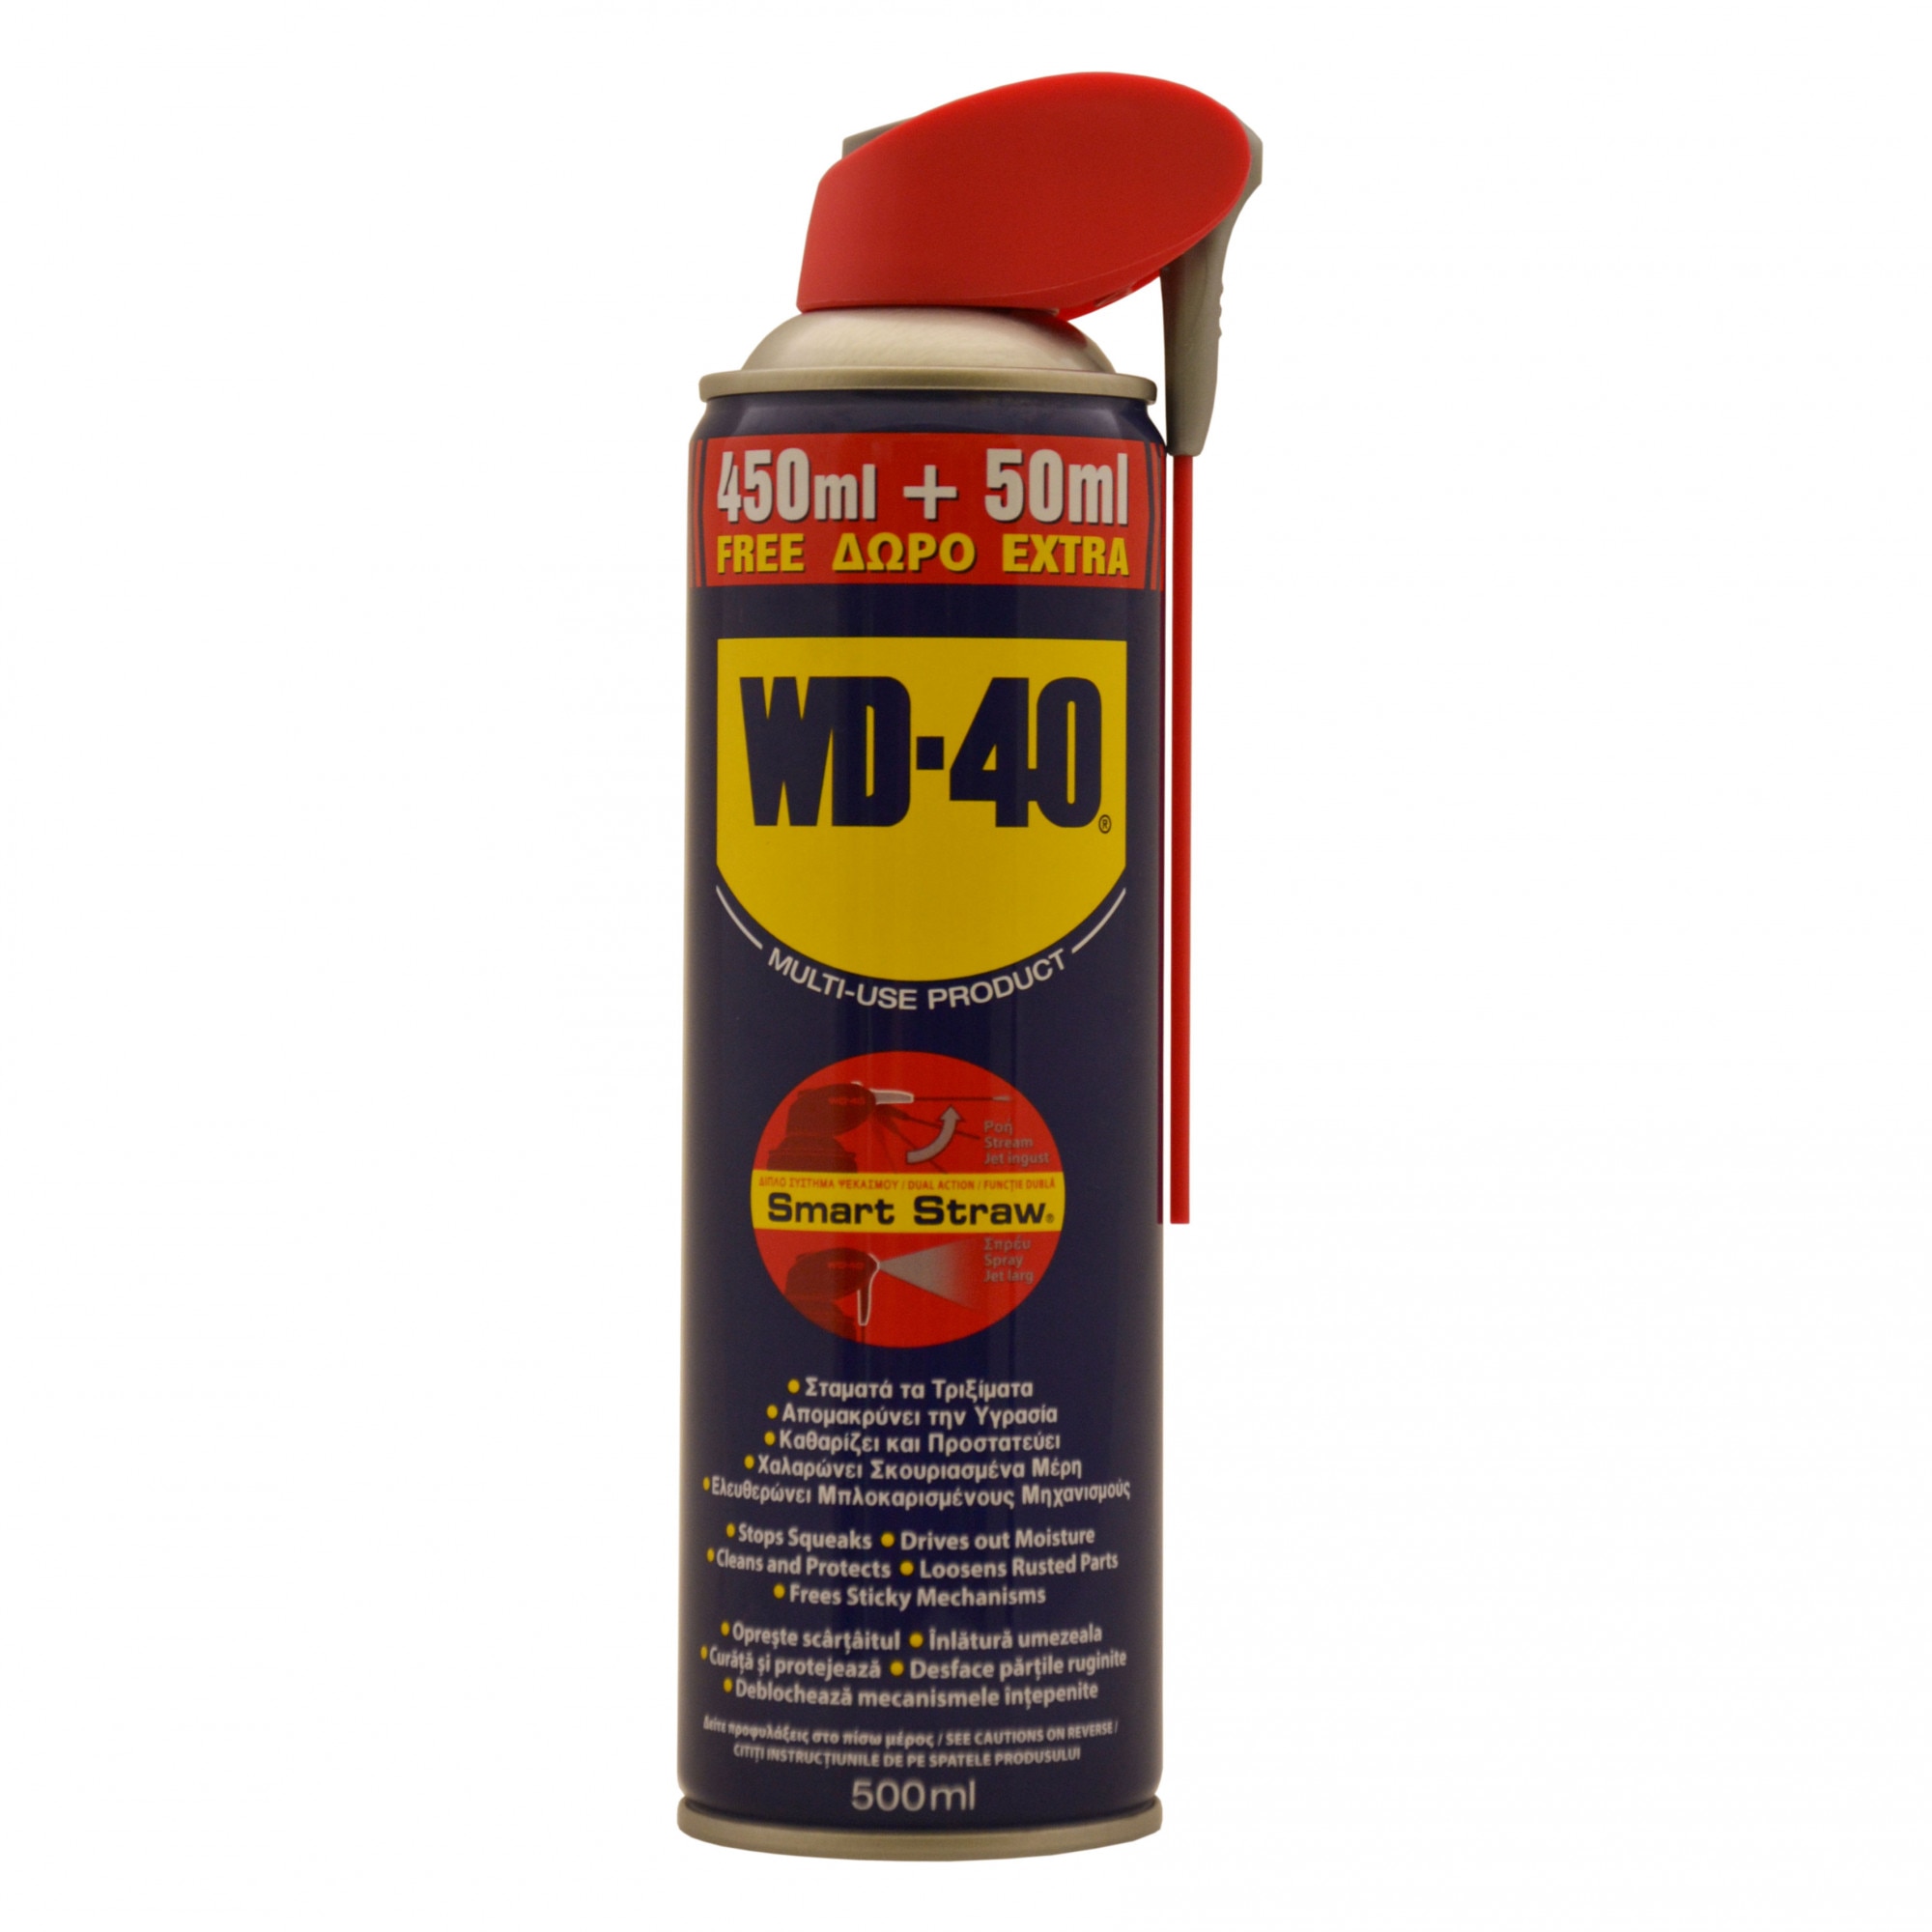 wd-40-smart-straw-univerz-lis-kontaktspray-450-ml-50-ml-emag-hu